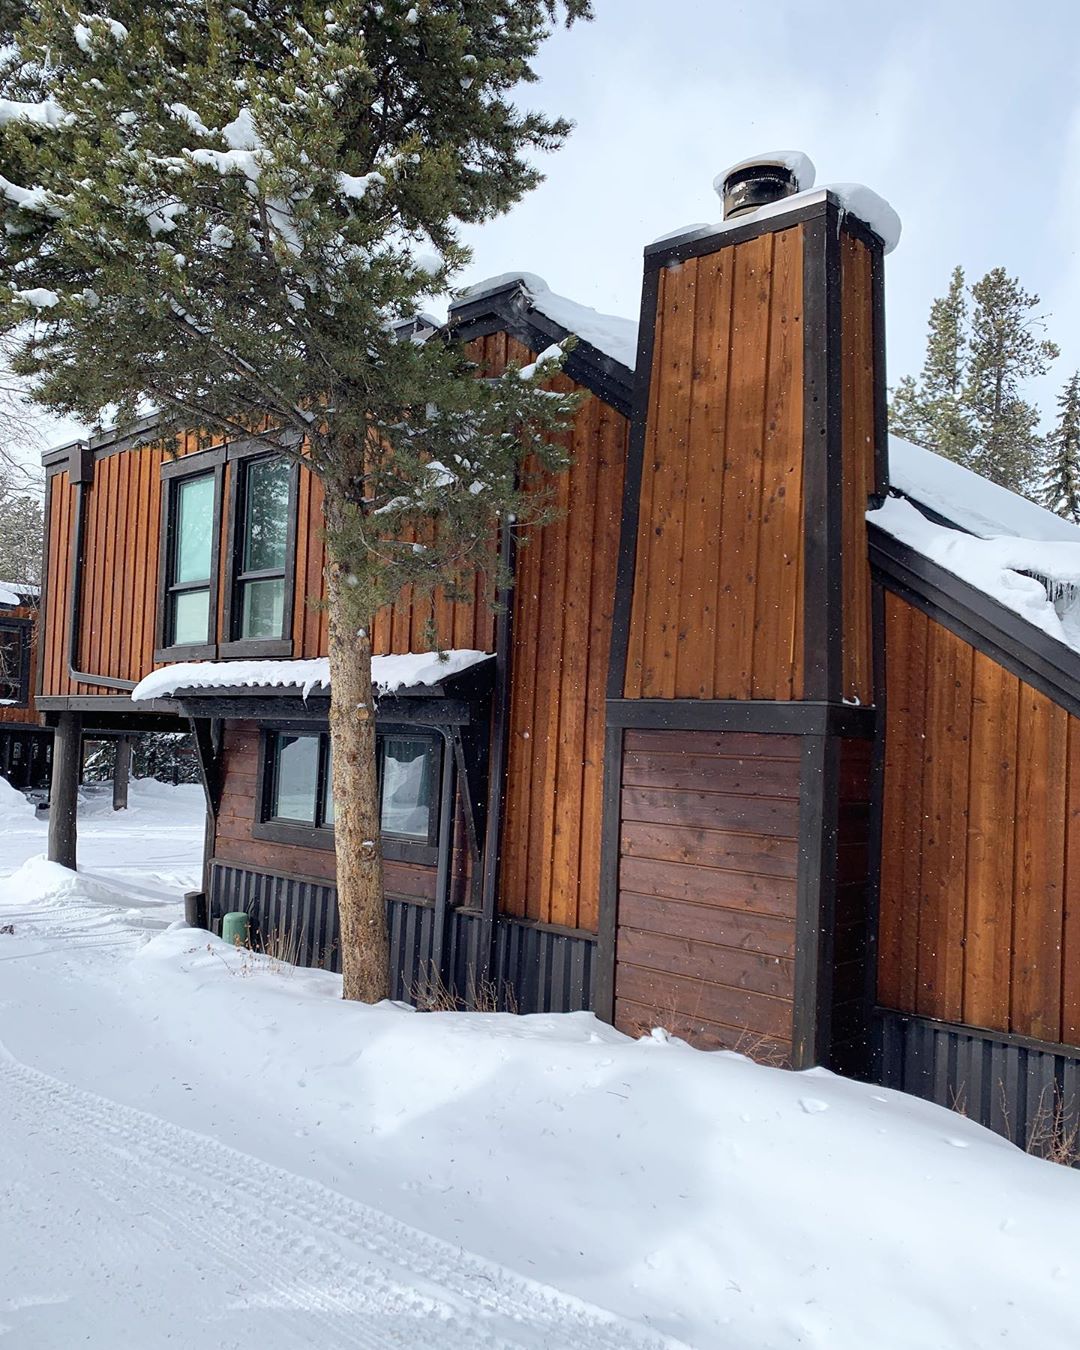 Ski Cabin with Fresh Snow Surrounding It. Photo by Instagram user @caseranyc